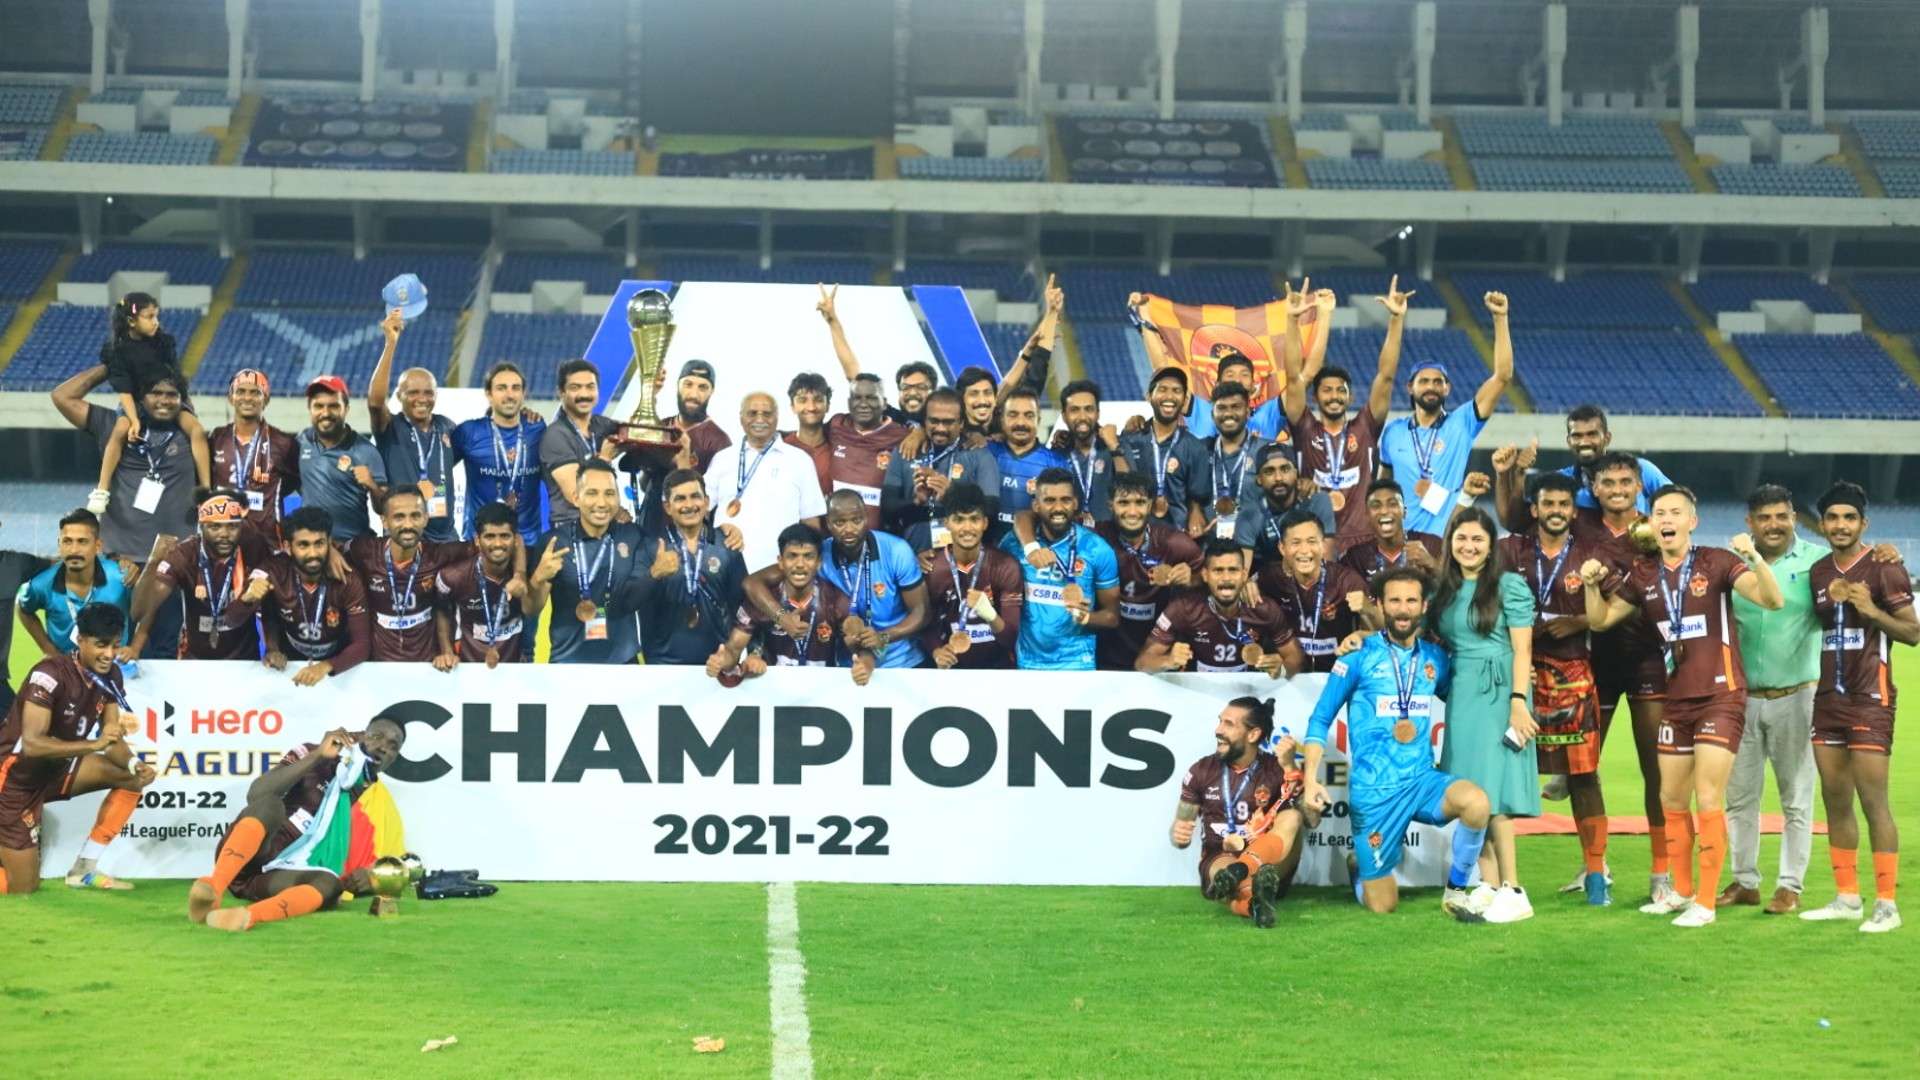 Gokulam Kerala I-League 2021-22 champions